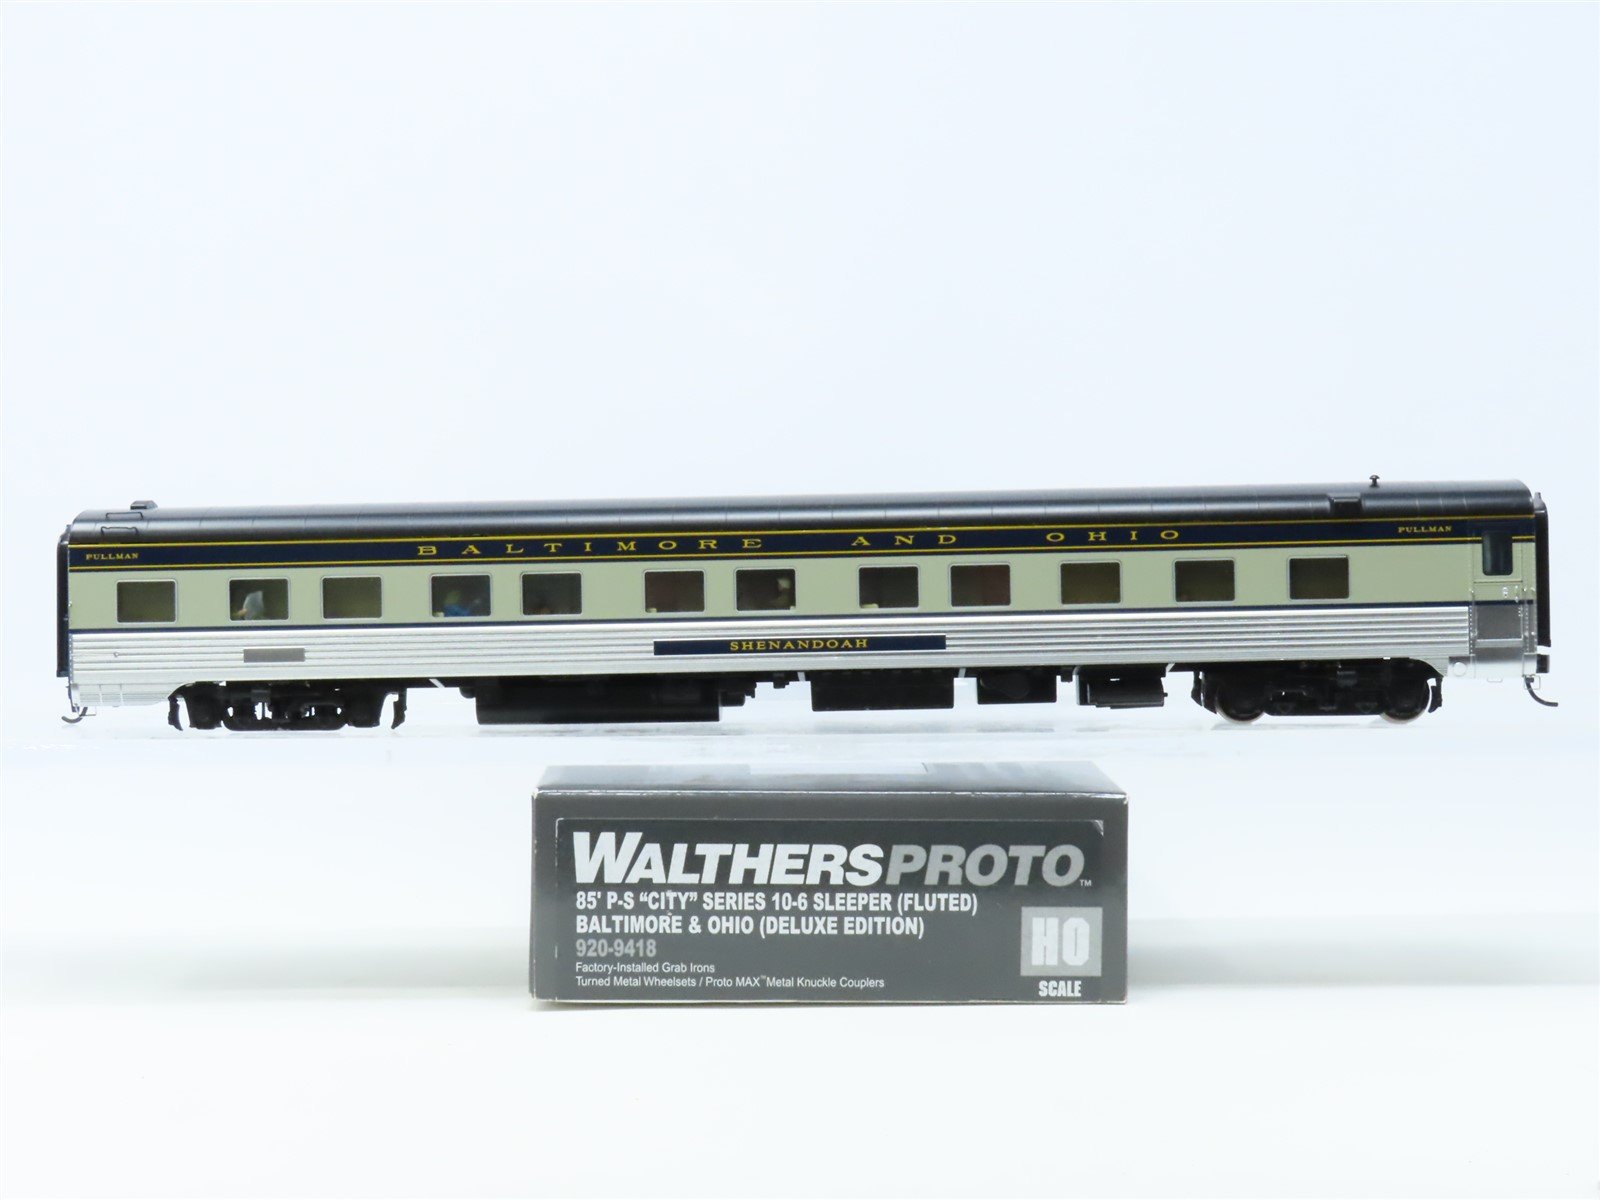 HO Walthers Proto 920-9418 B&O Baltimore & Ohio Sleeper Passenger "Shenandoah"